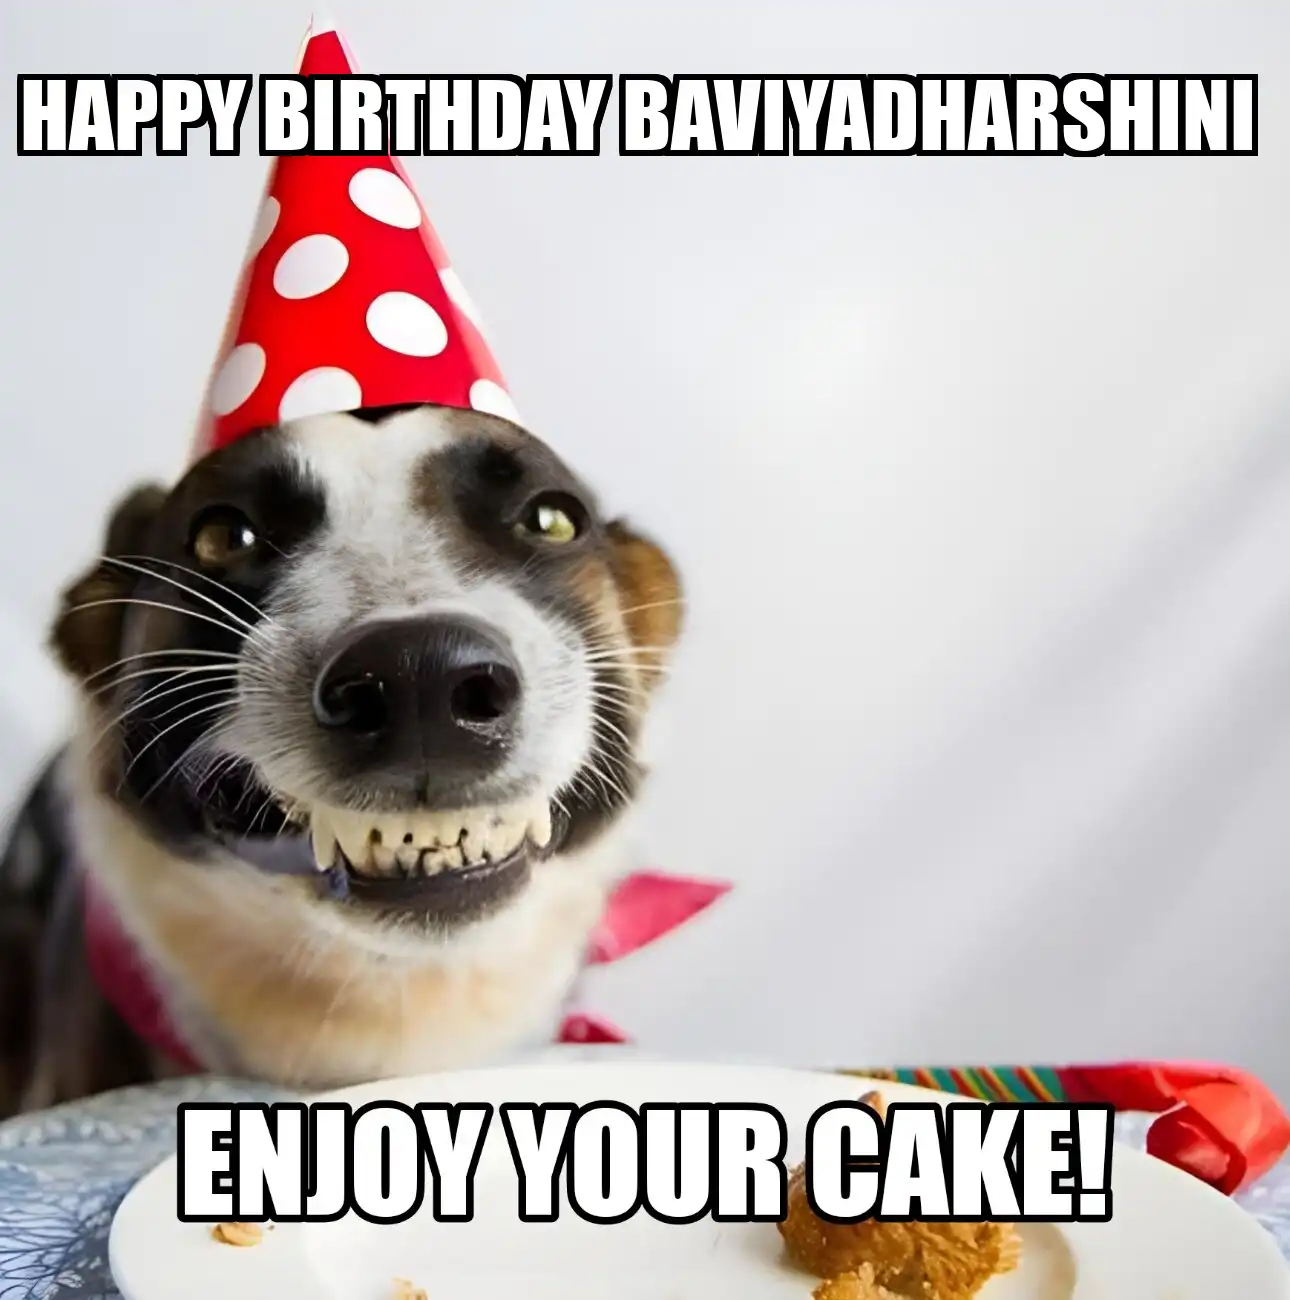 Happy Birthday Baviyadharshini Enjoy Your Cake Dog Meme